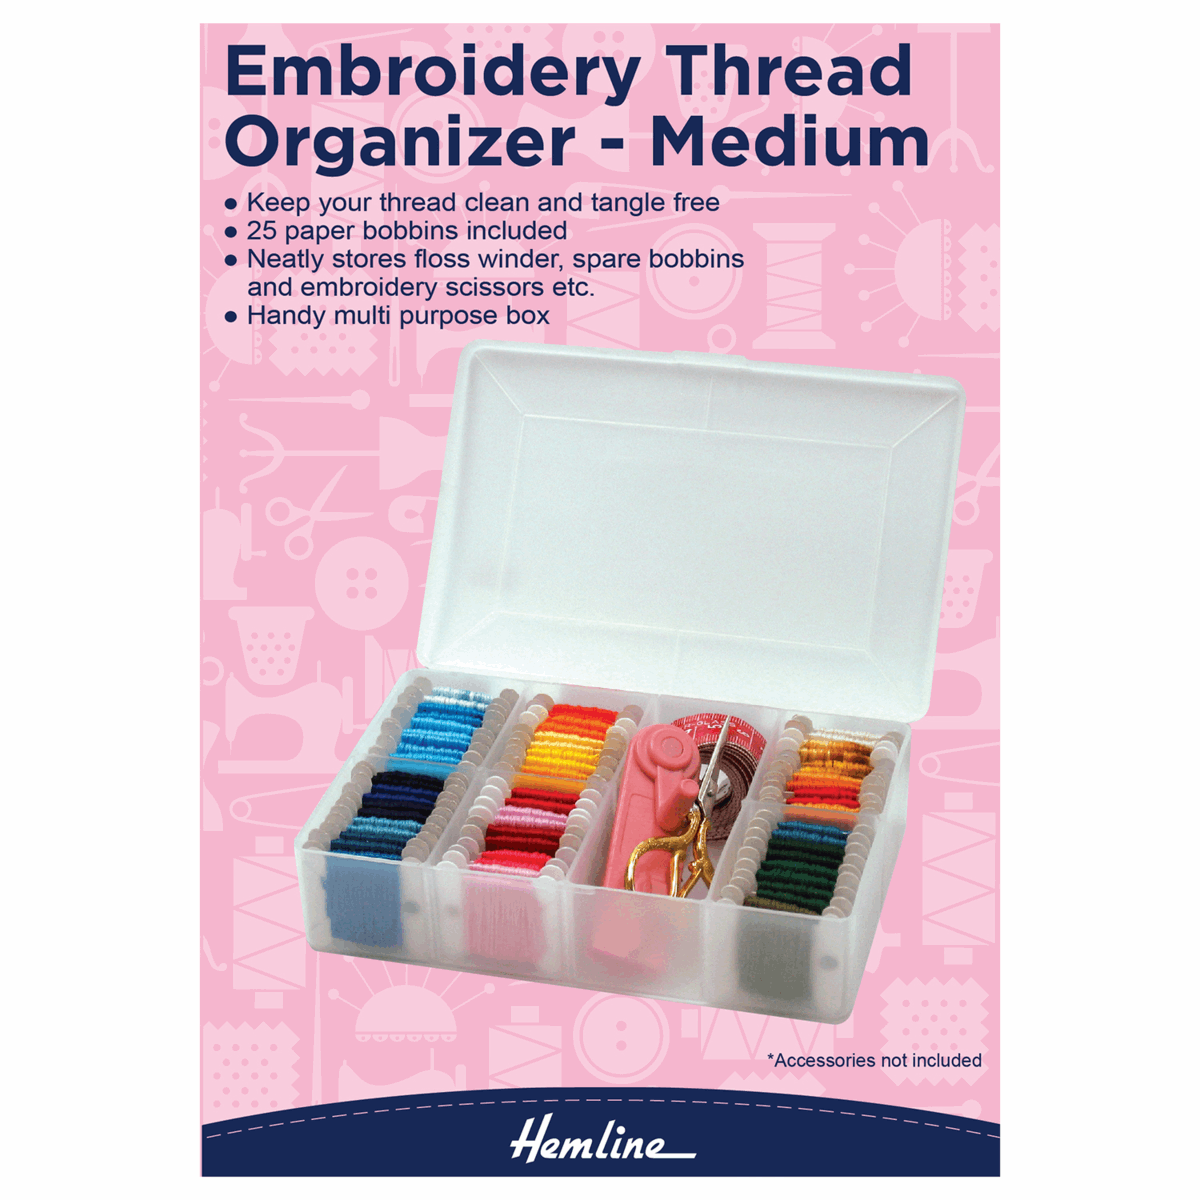 Embroidery Thread Organiser - Medium by Hemline  